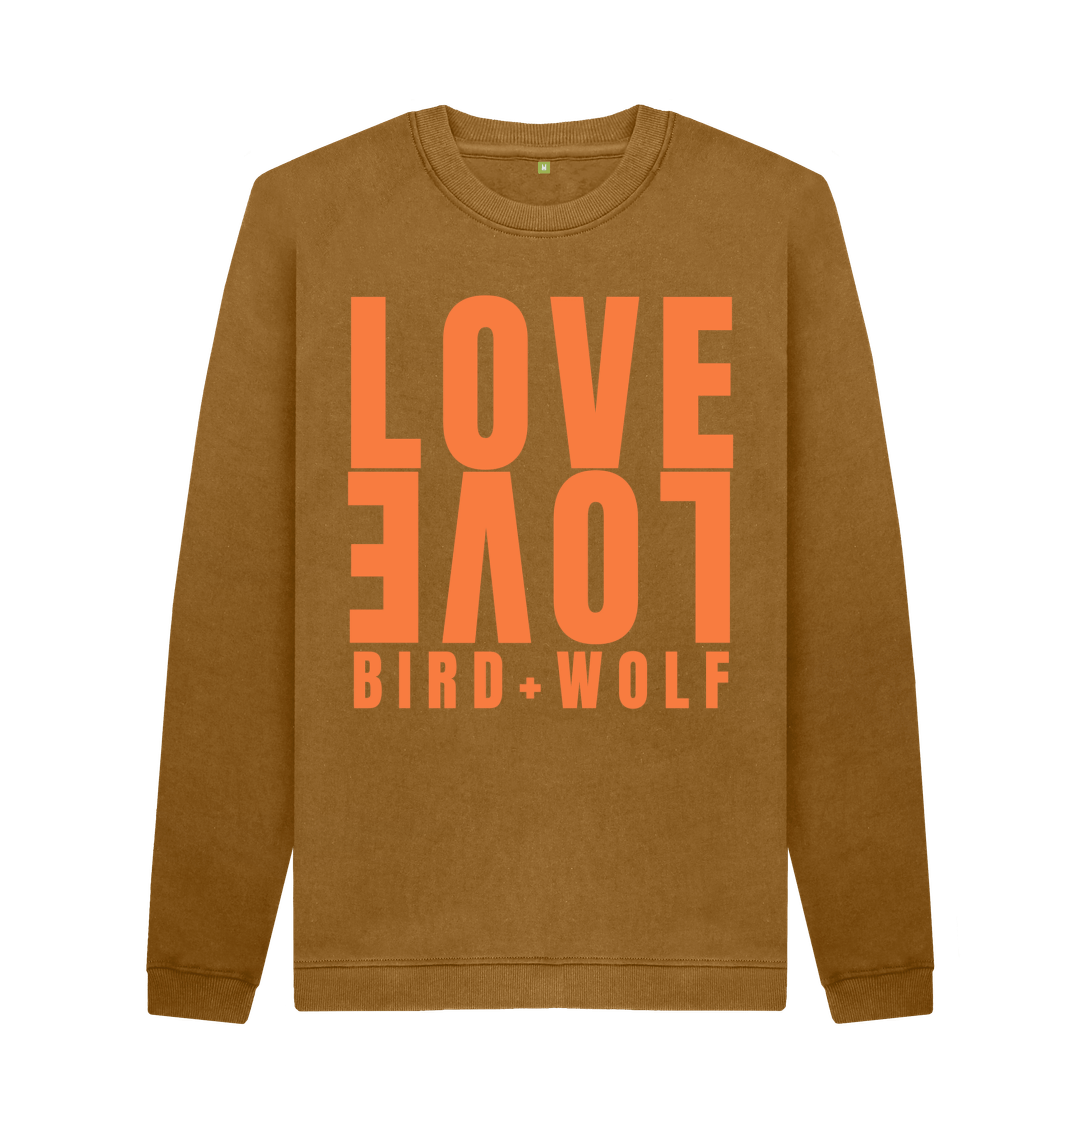 Brown Love Love Cosy Sweatshirt (Orange Lettering)